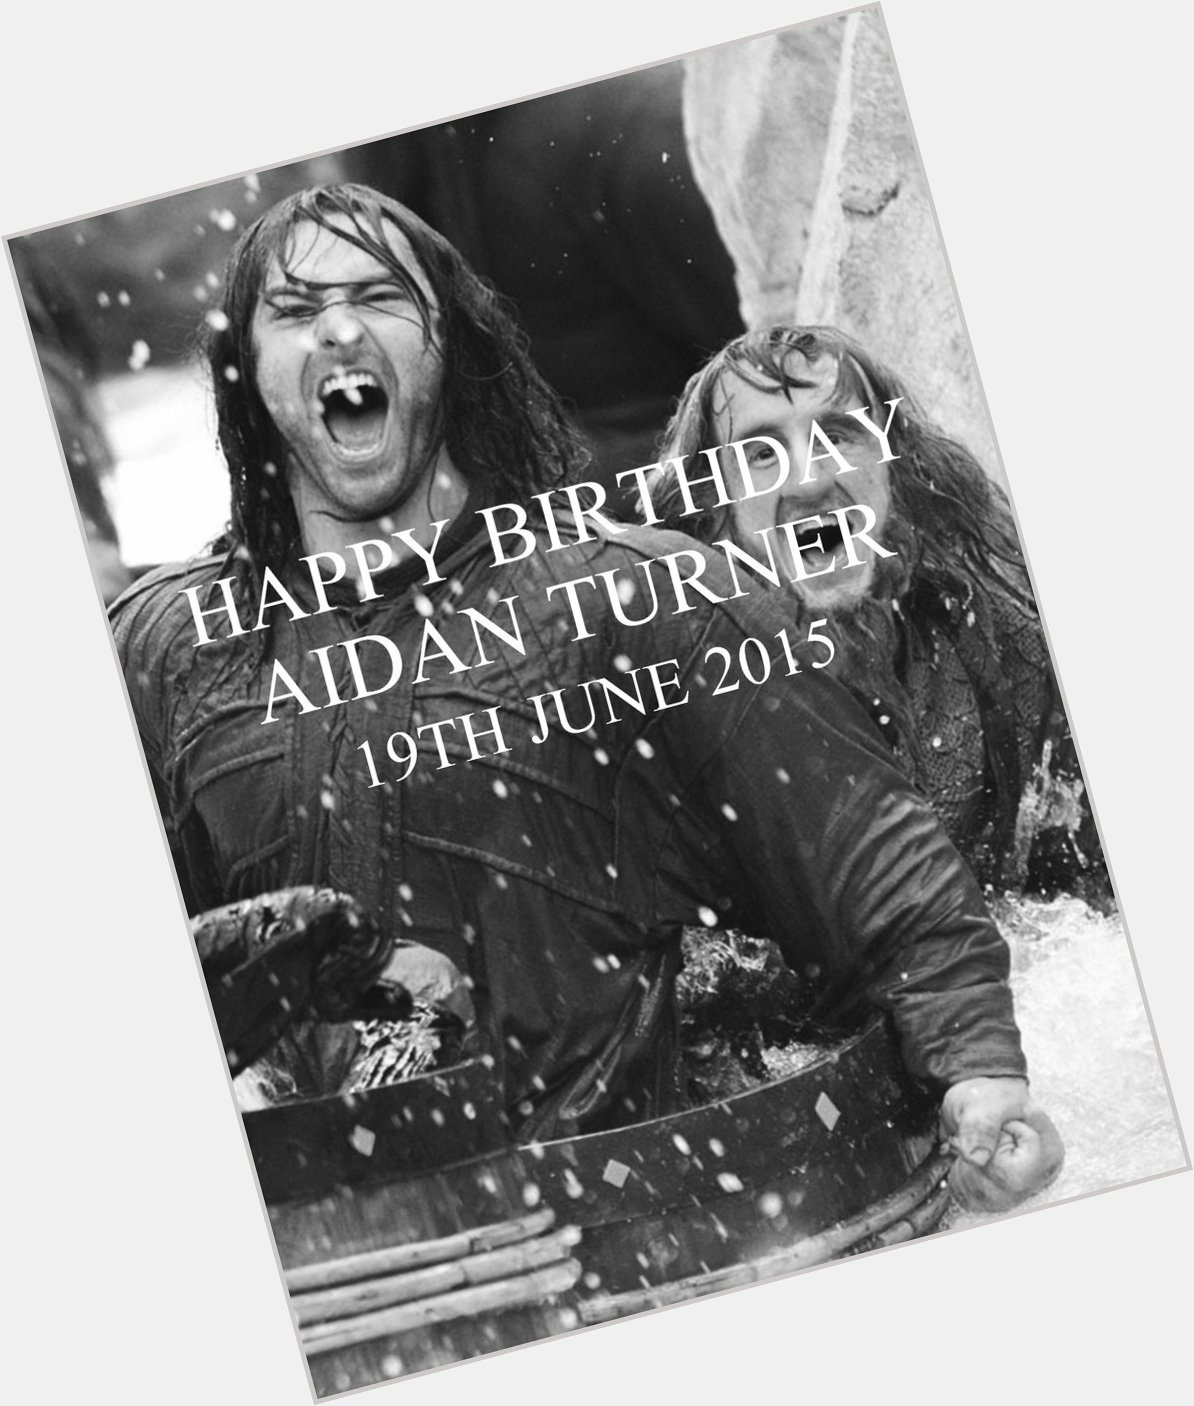 \Happy 32nd Birthday Aidan Turner\ 